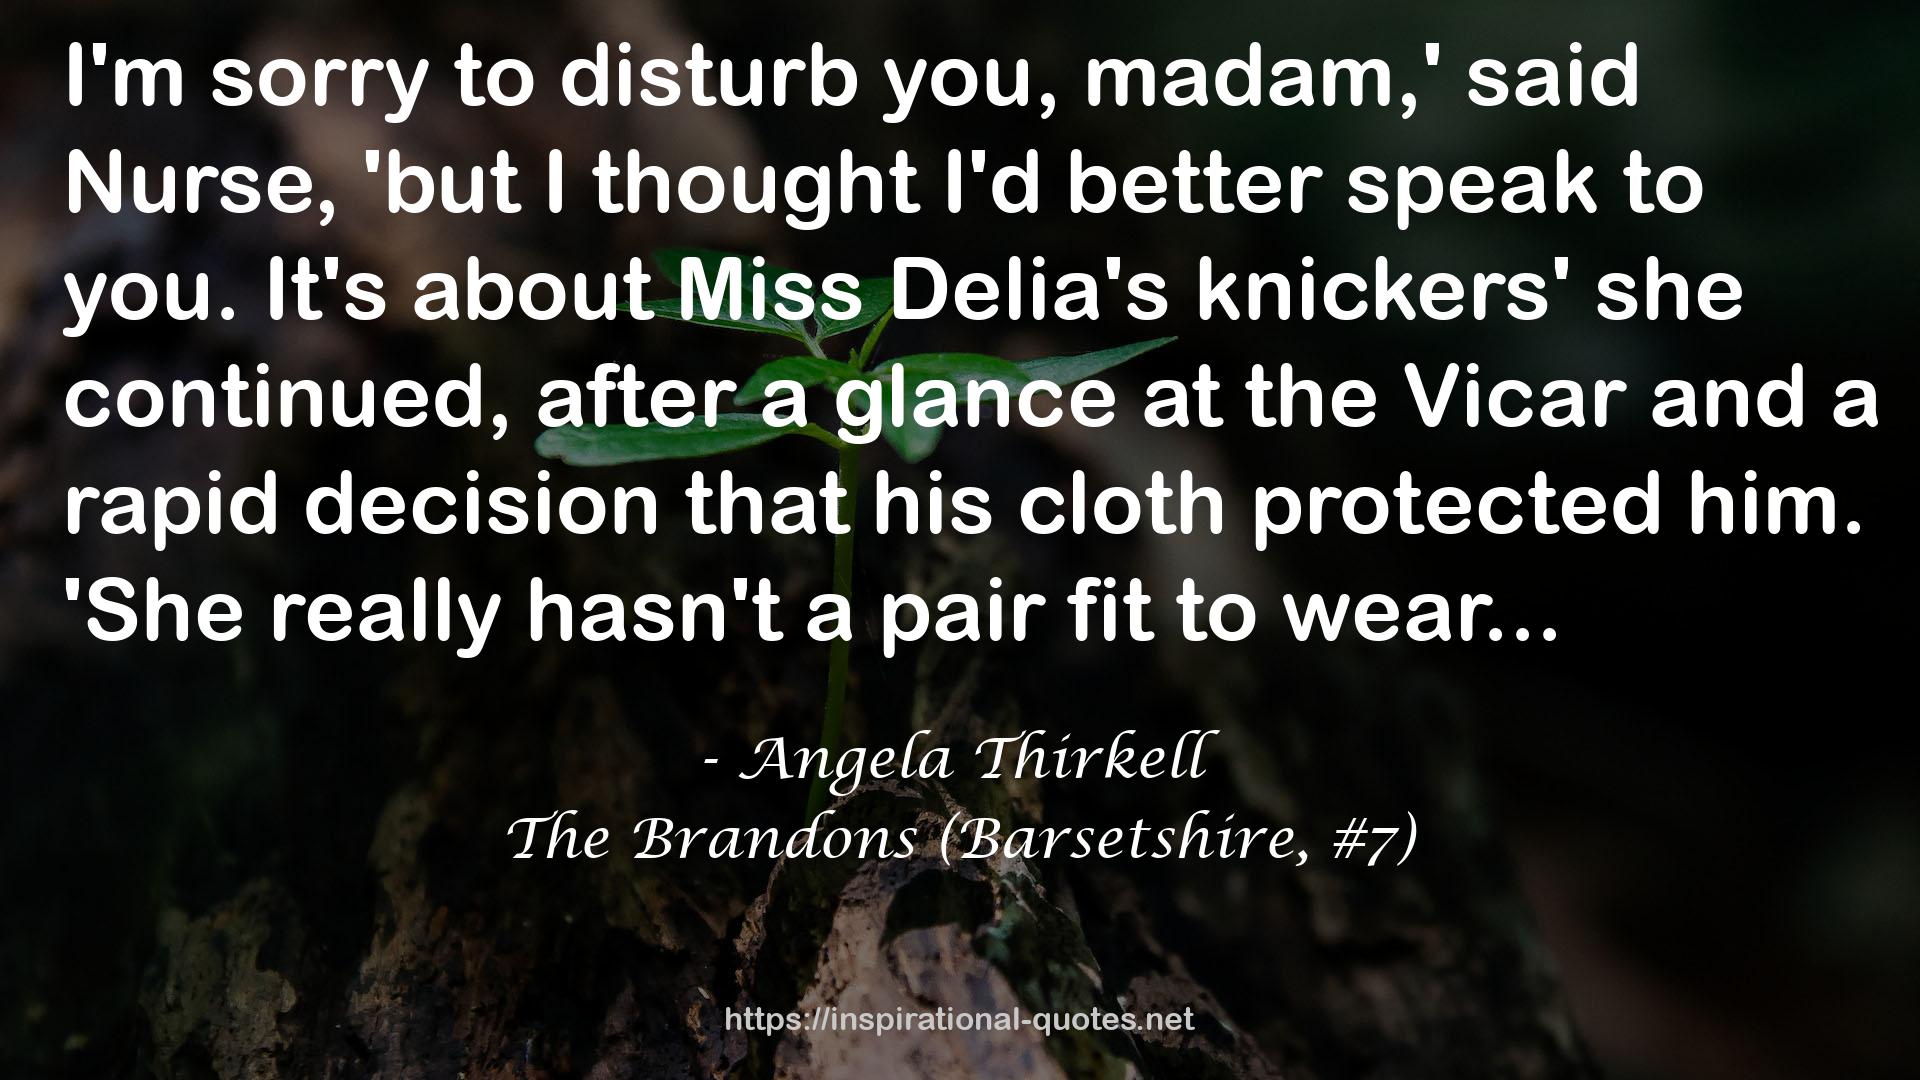 The Brandons (Barsetshire, #7) QUOTES